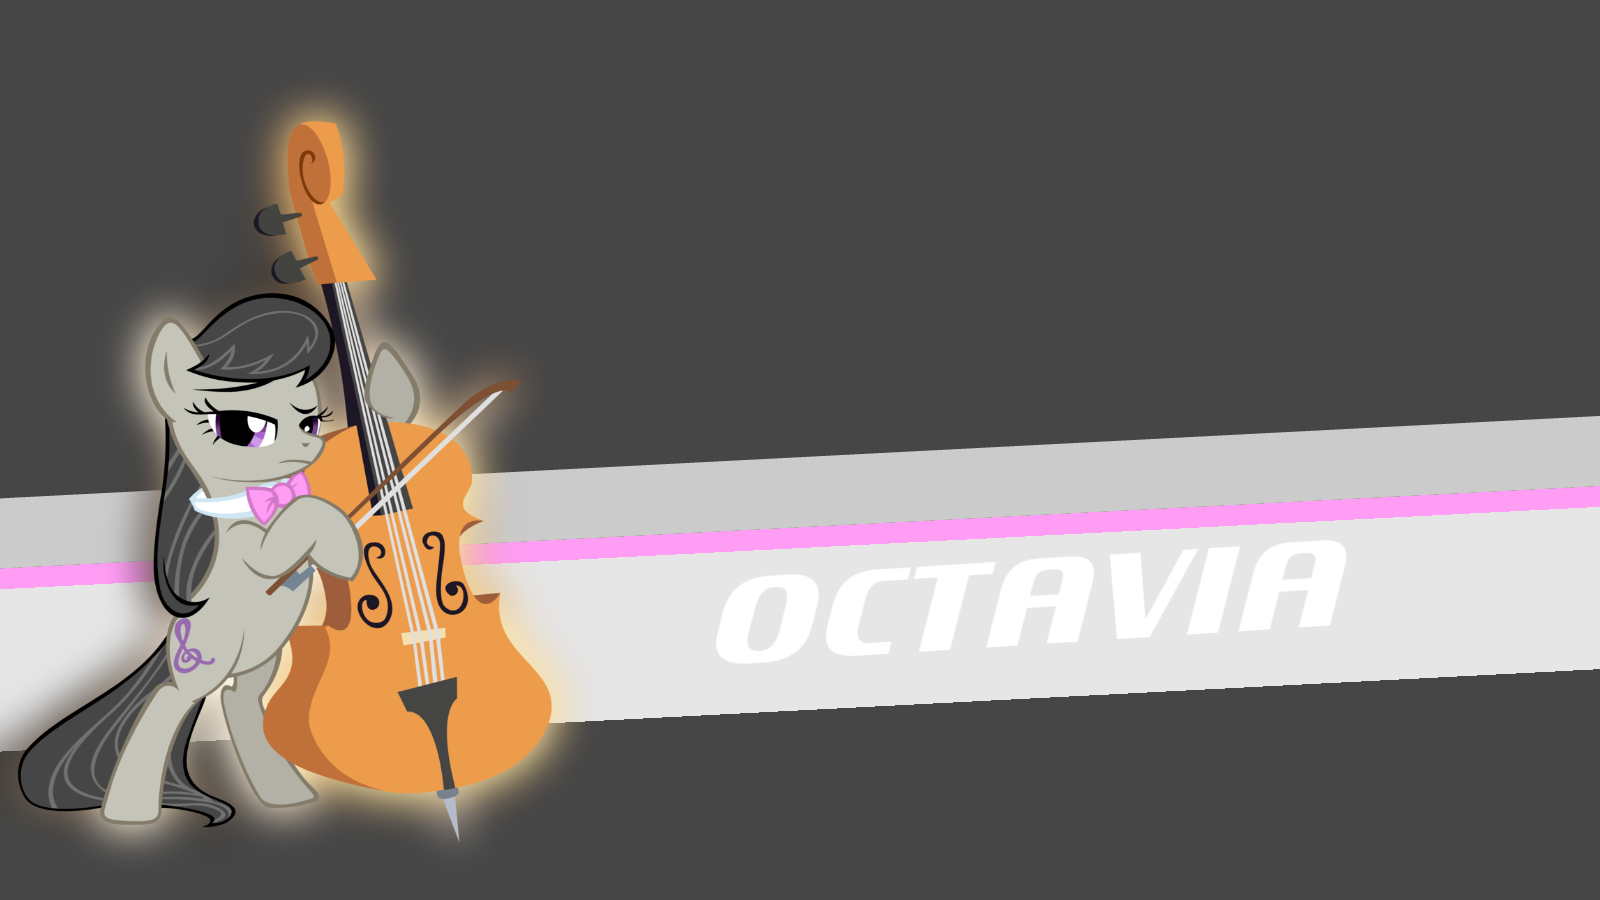 Octavia Motorwerk Wallpaper by TheUnsespectedBrony